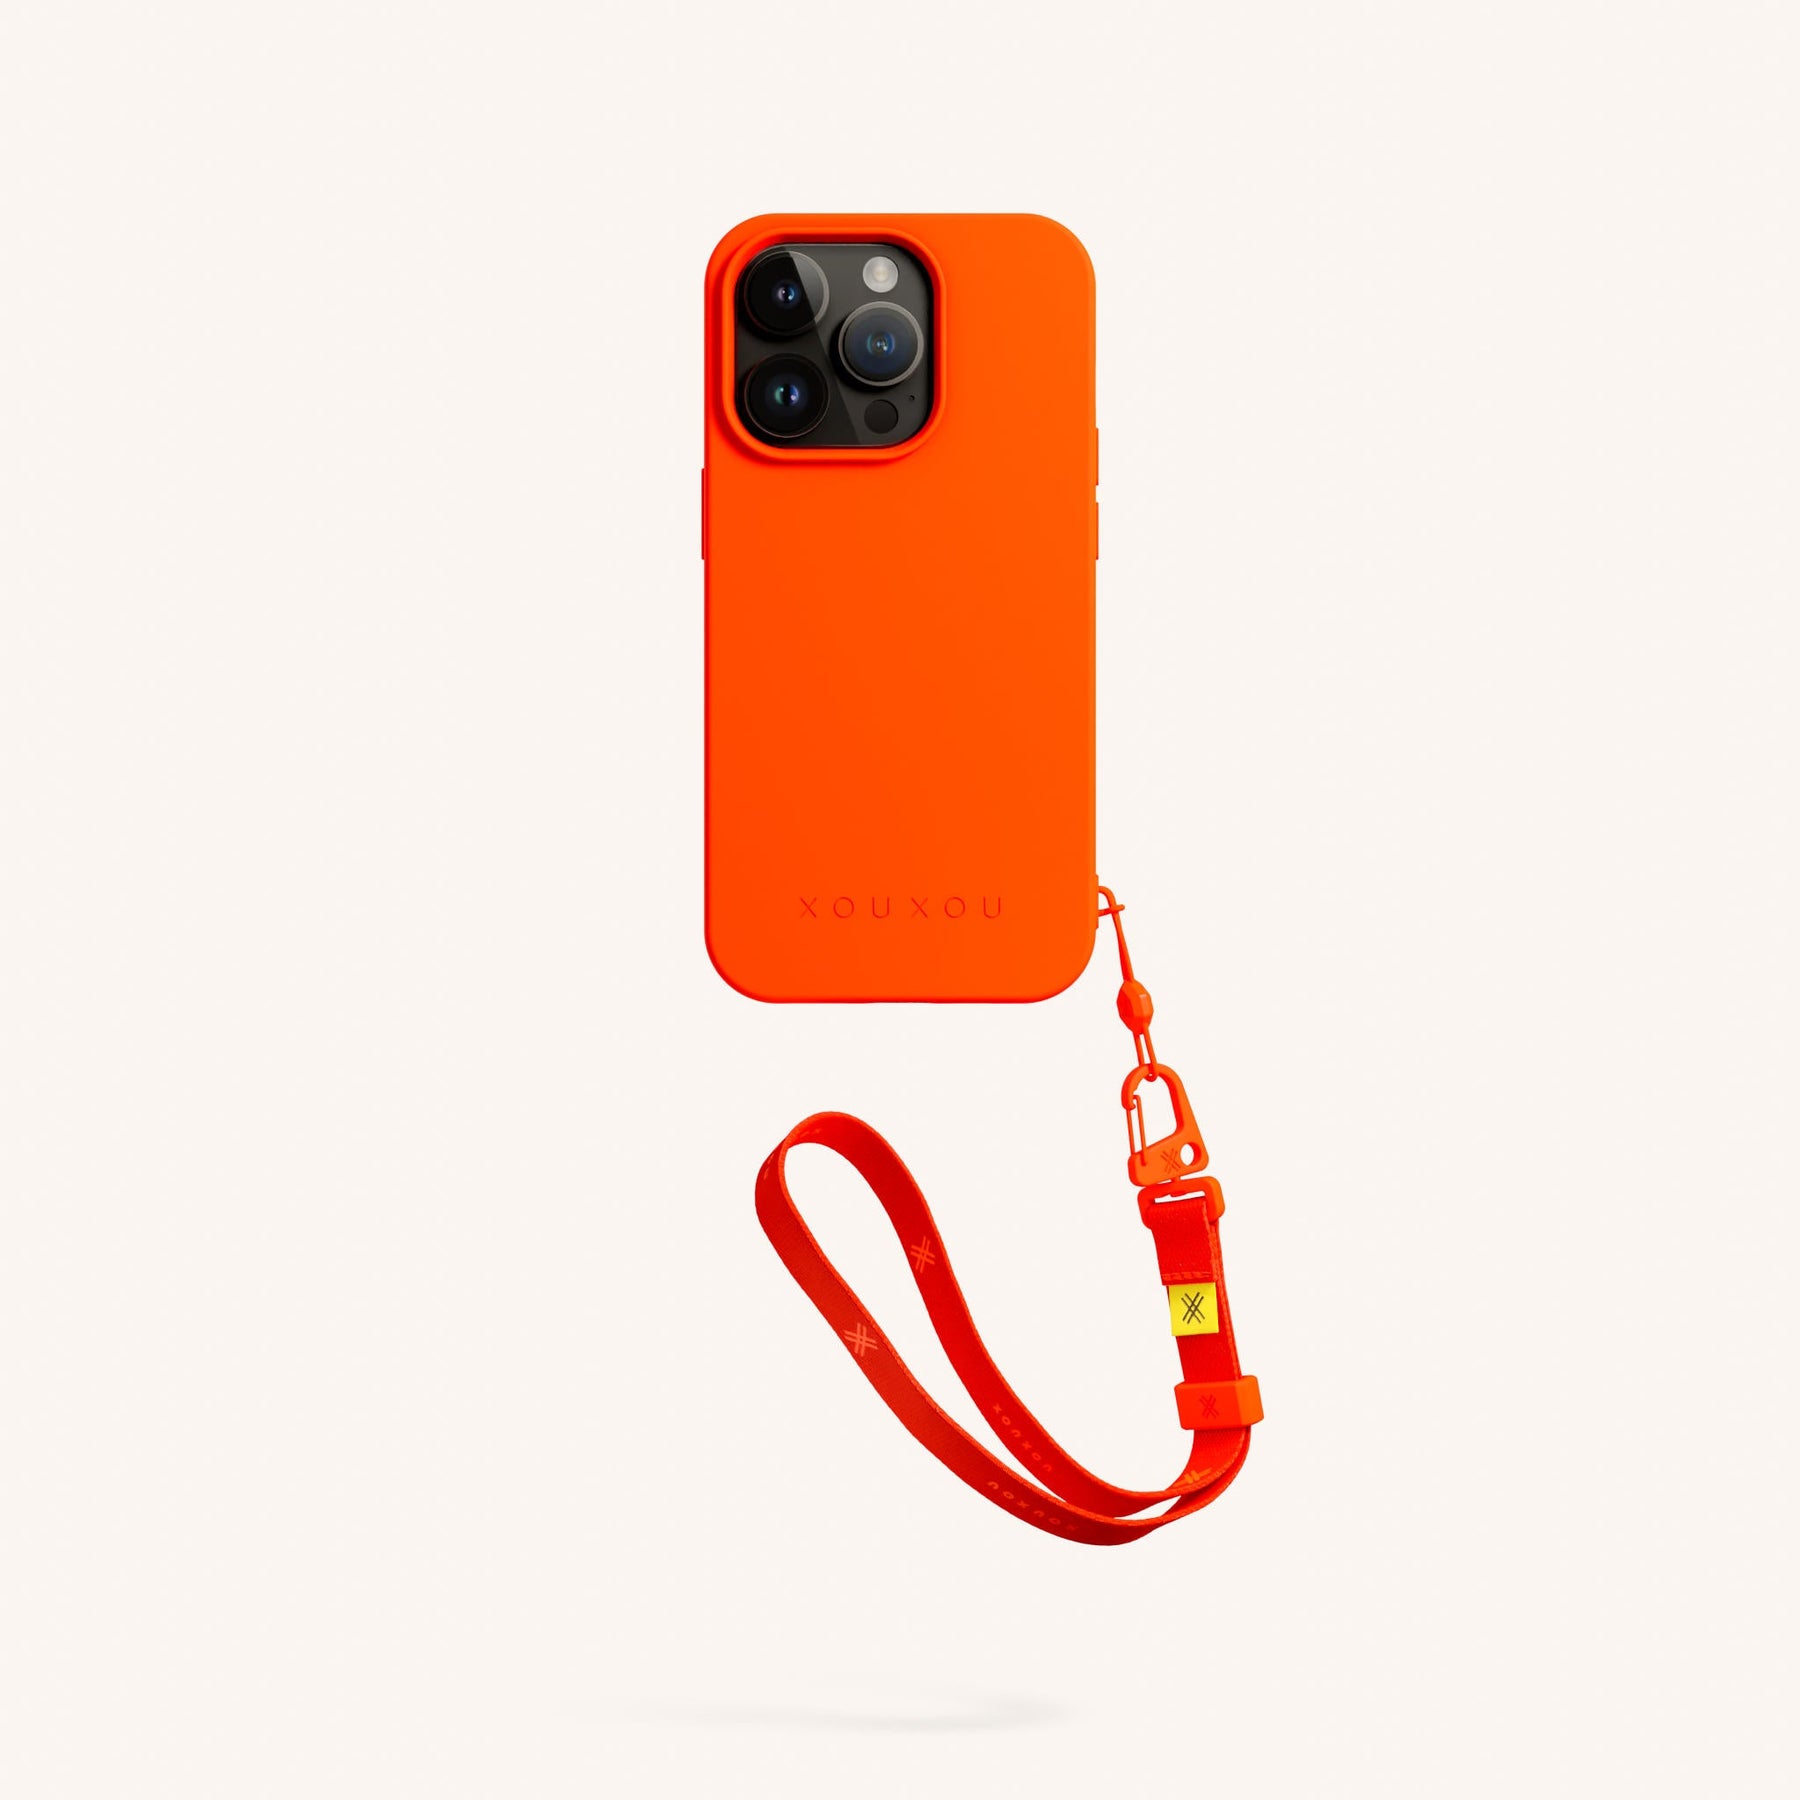 Phone Case with Wrist Strap in Neon Orange